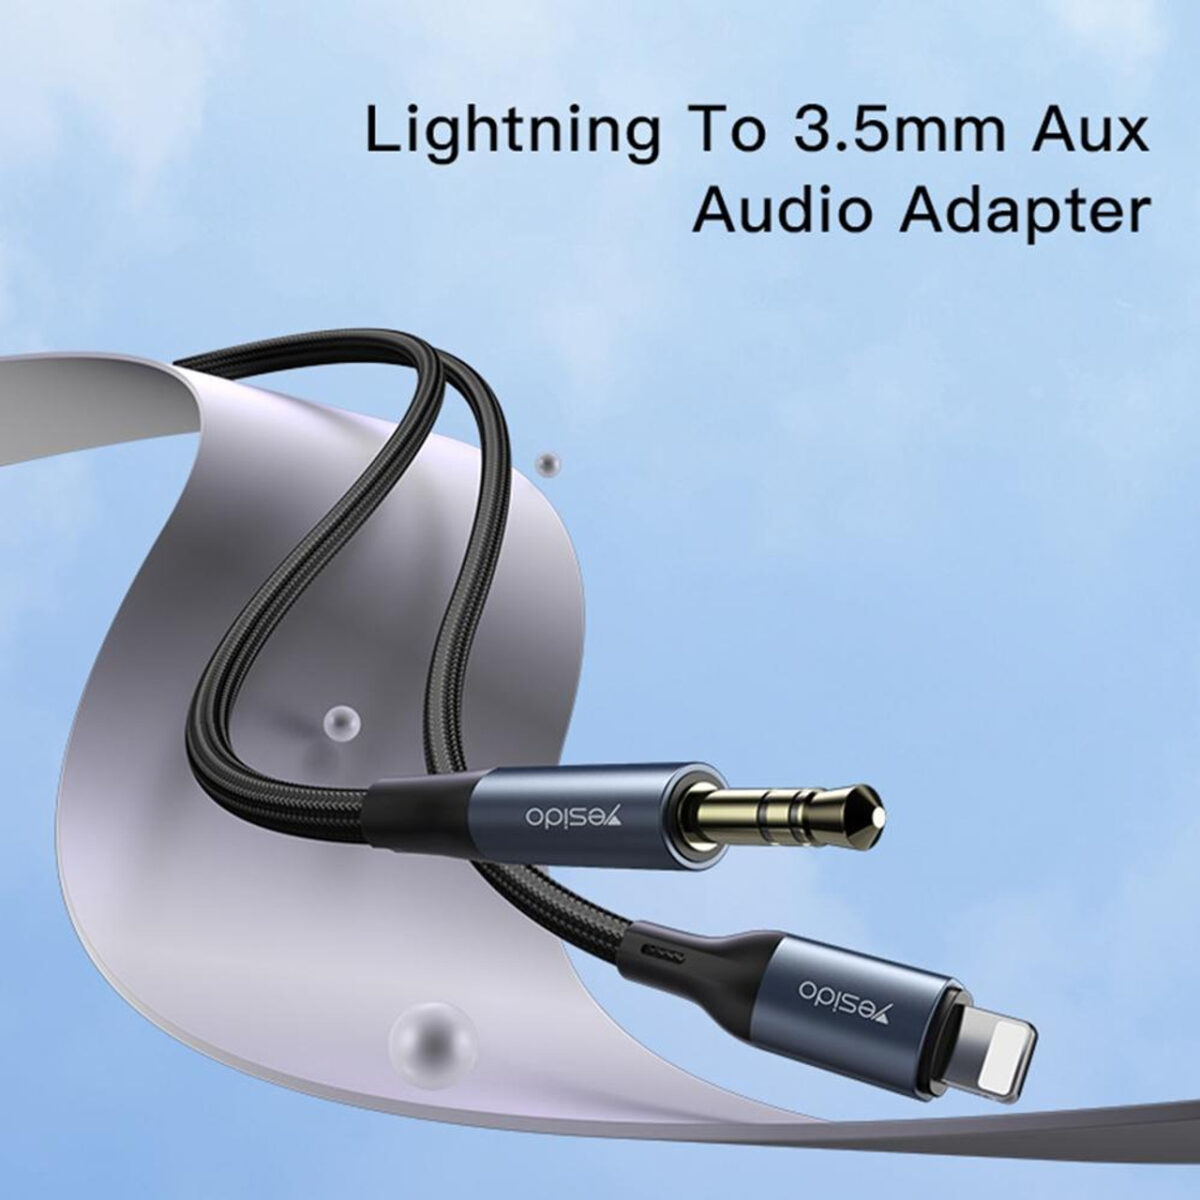 Yesido YAU35 Lightning to 3.5mm AUX Audio Adapter Cable, 1M, Black